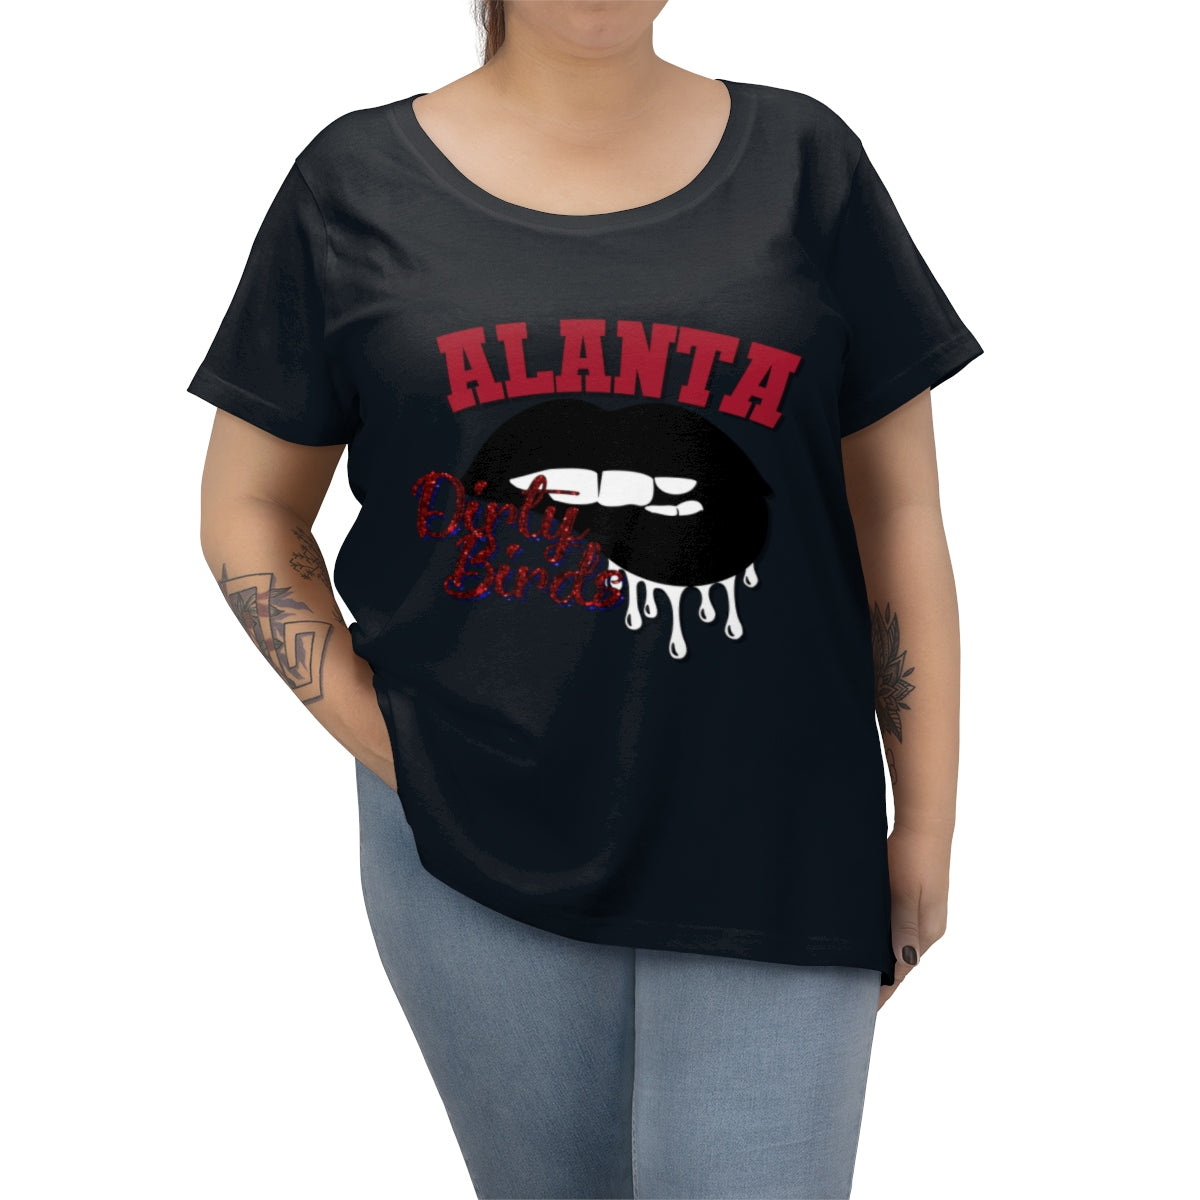 Atlanta "Dirty Birds" Falcons inspired Football Dripping Lips Women's Curvy Tee